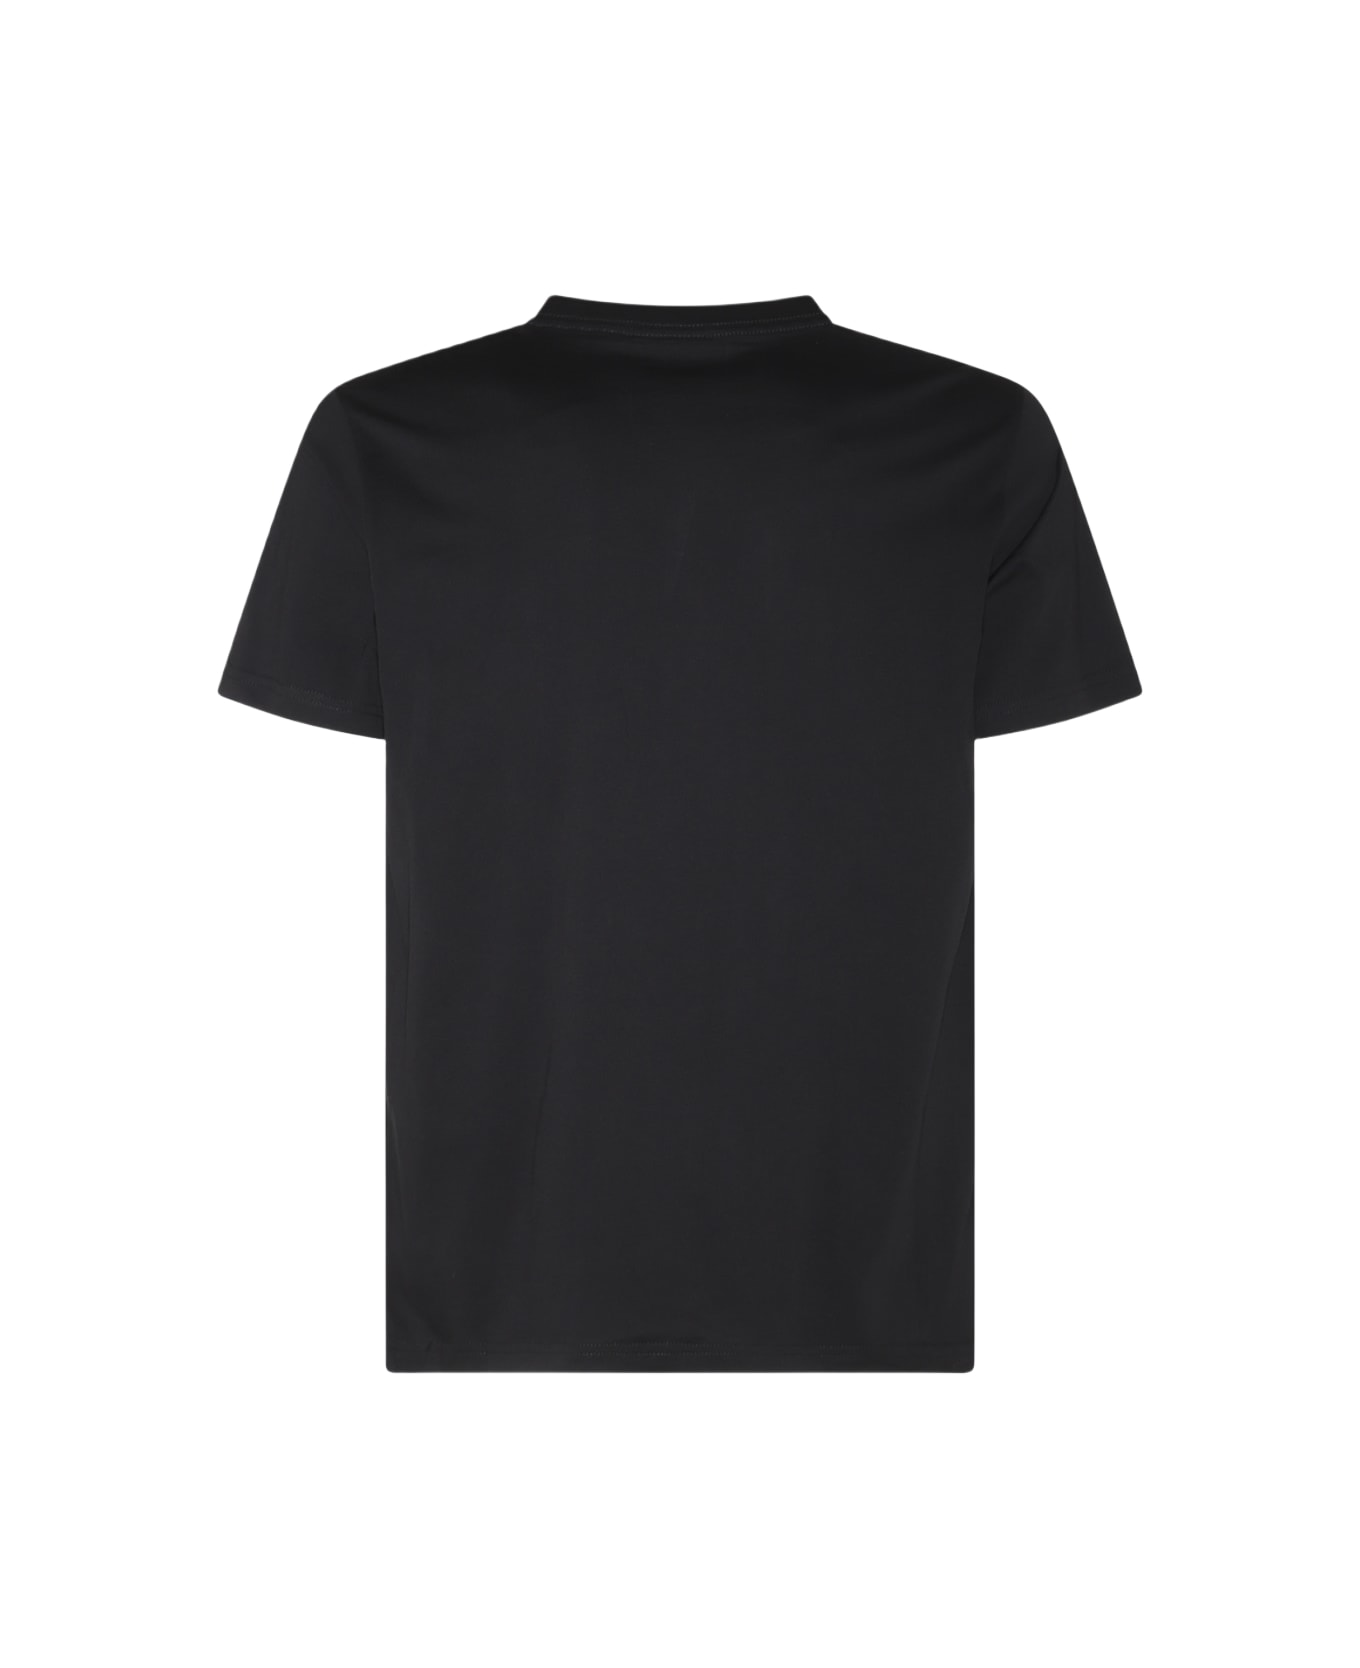 Paul Smith Black Cotton T-shirt シャツ